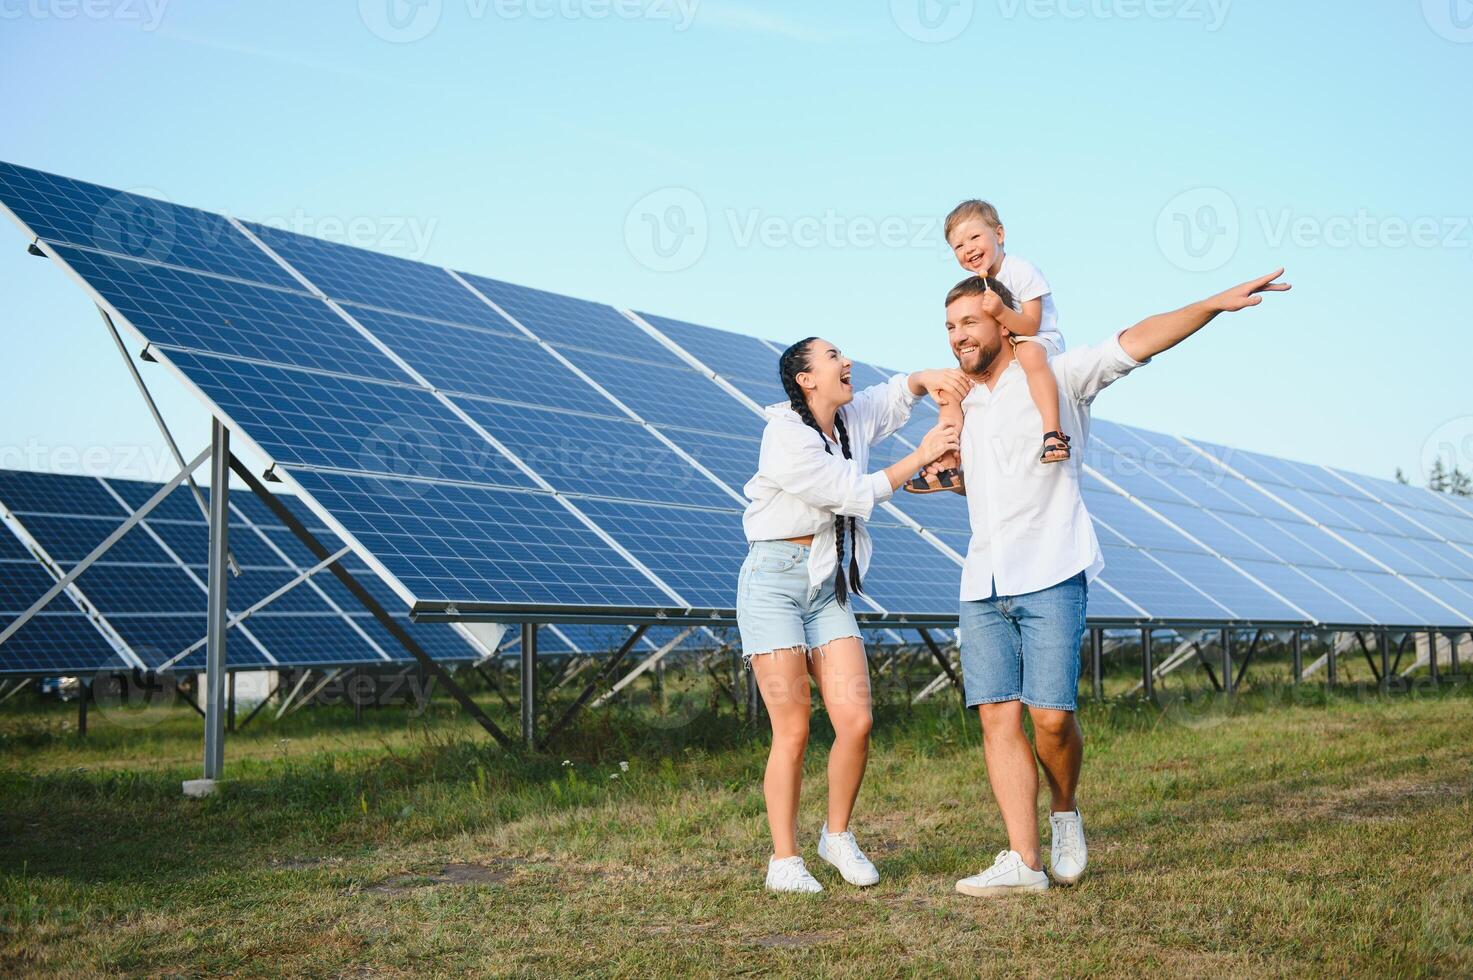 contento familia cerca solar paneles alternativa energía fuente foto